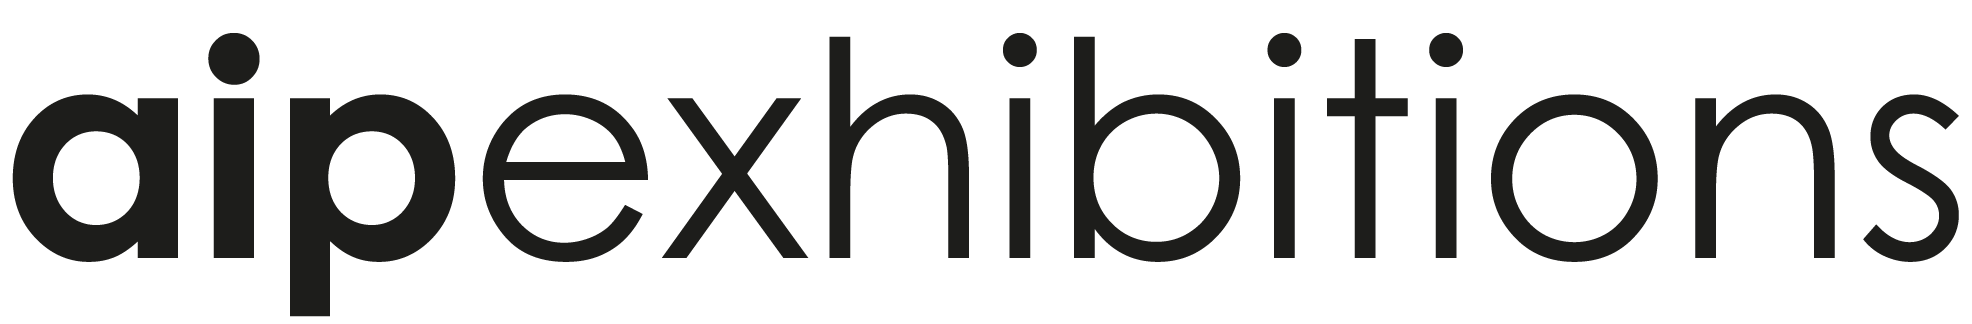 Thumbnail (logo)